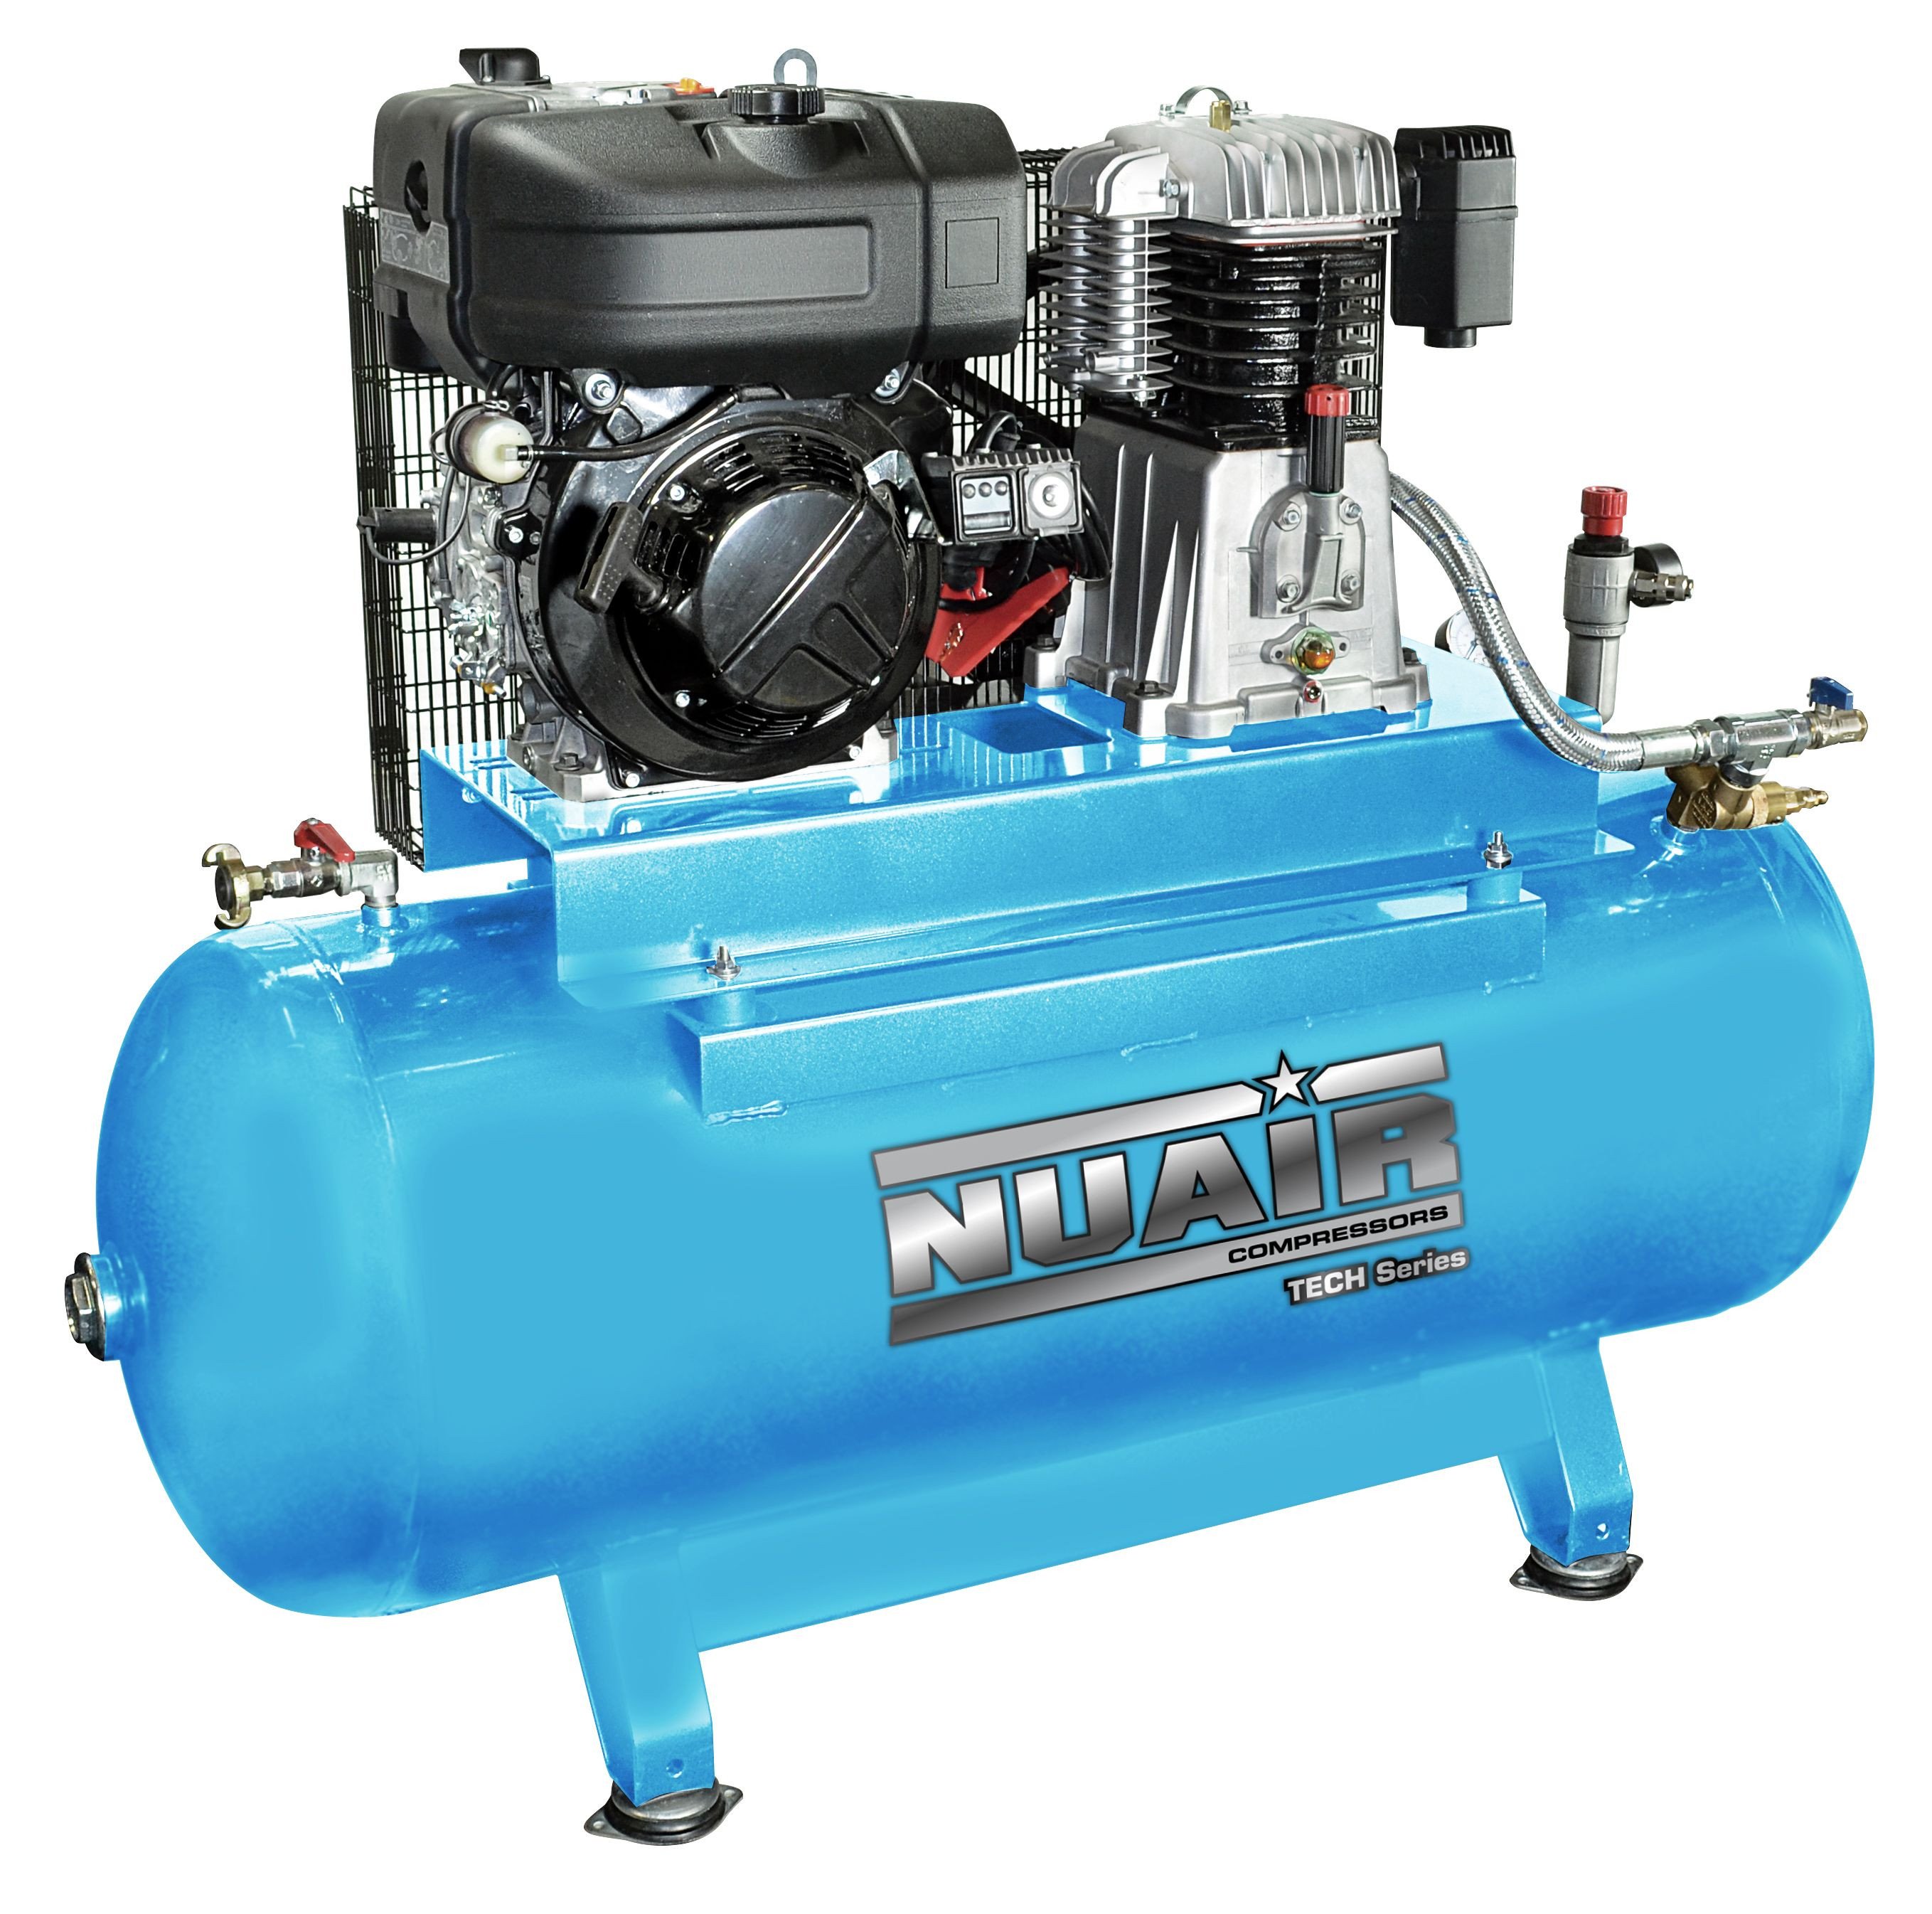 Nuair 270升专业/ Lombardini柴油皮带传动空气压缩机- 33.3 CFM 10 HP